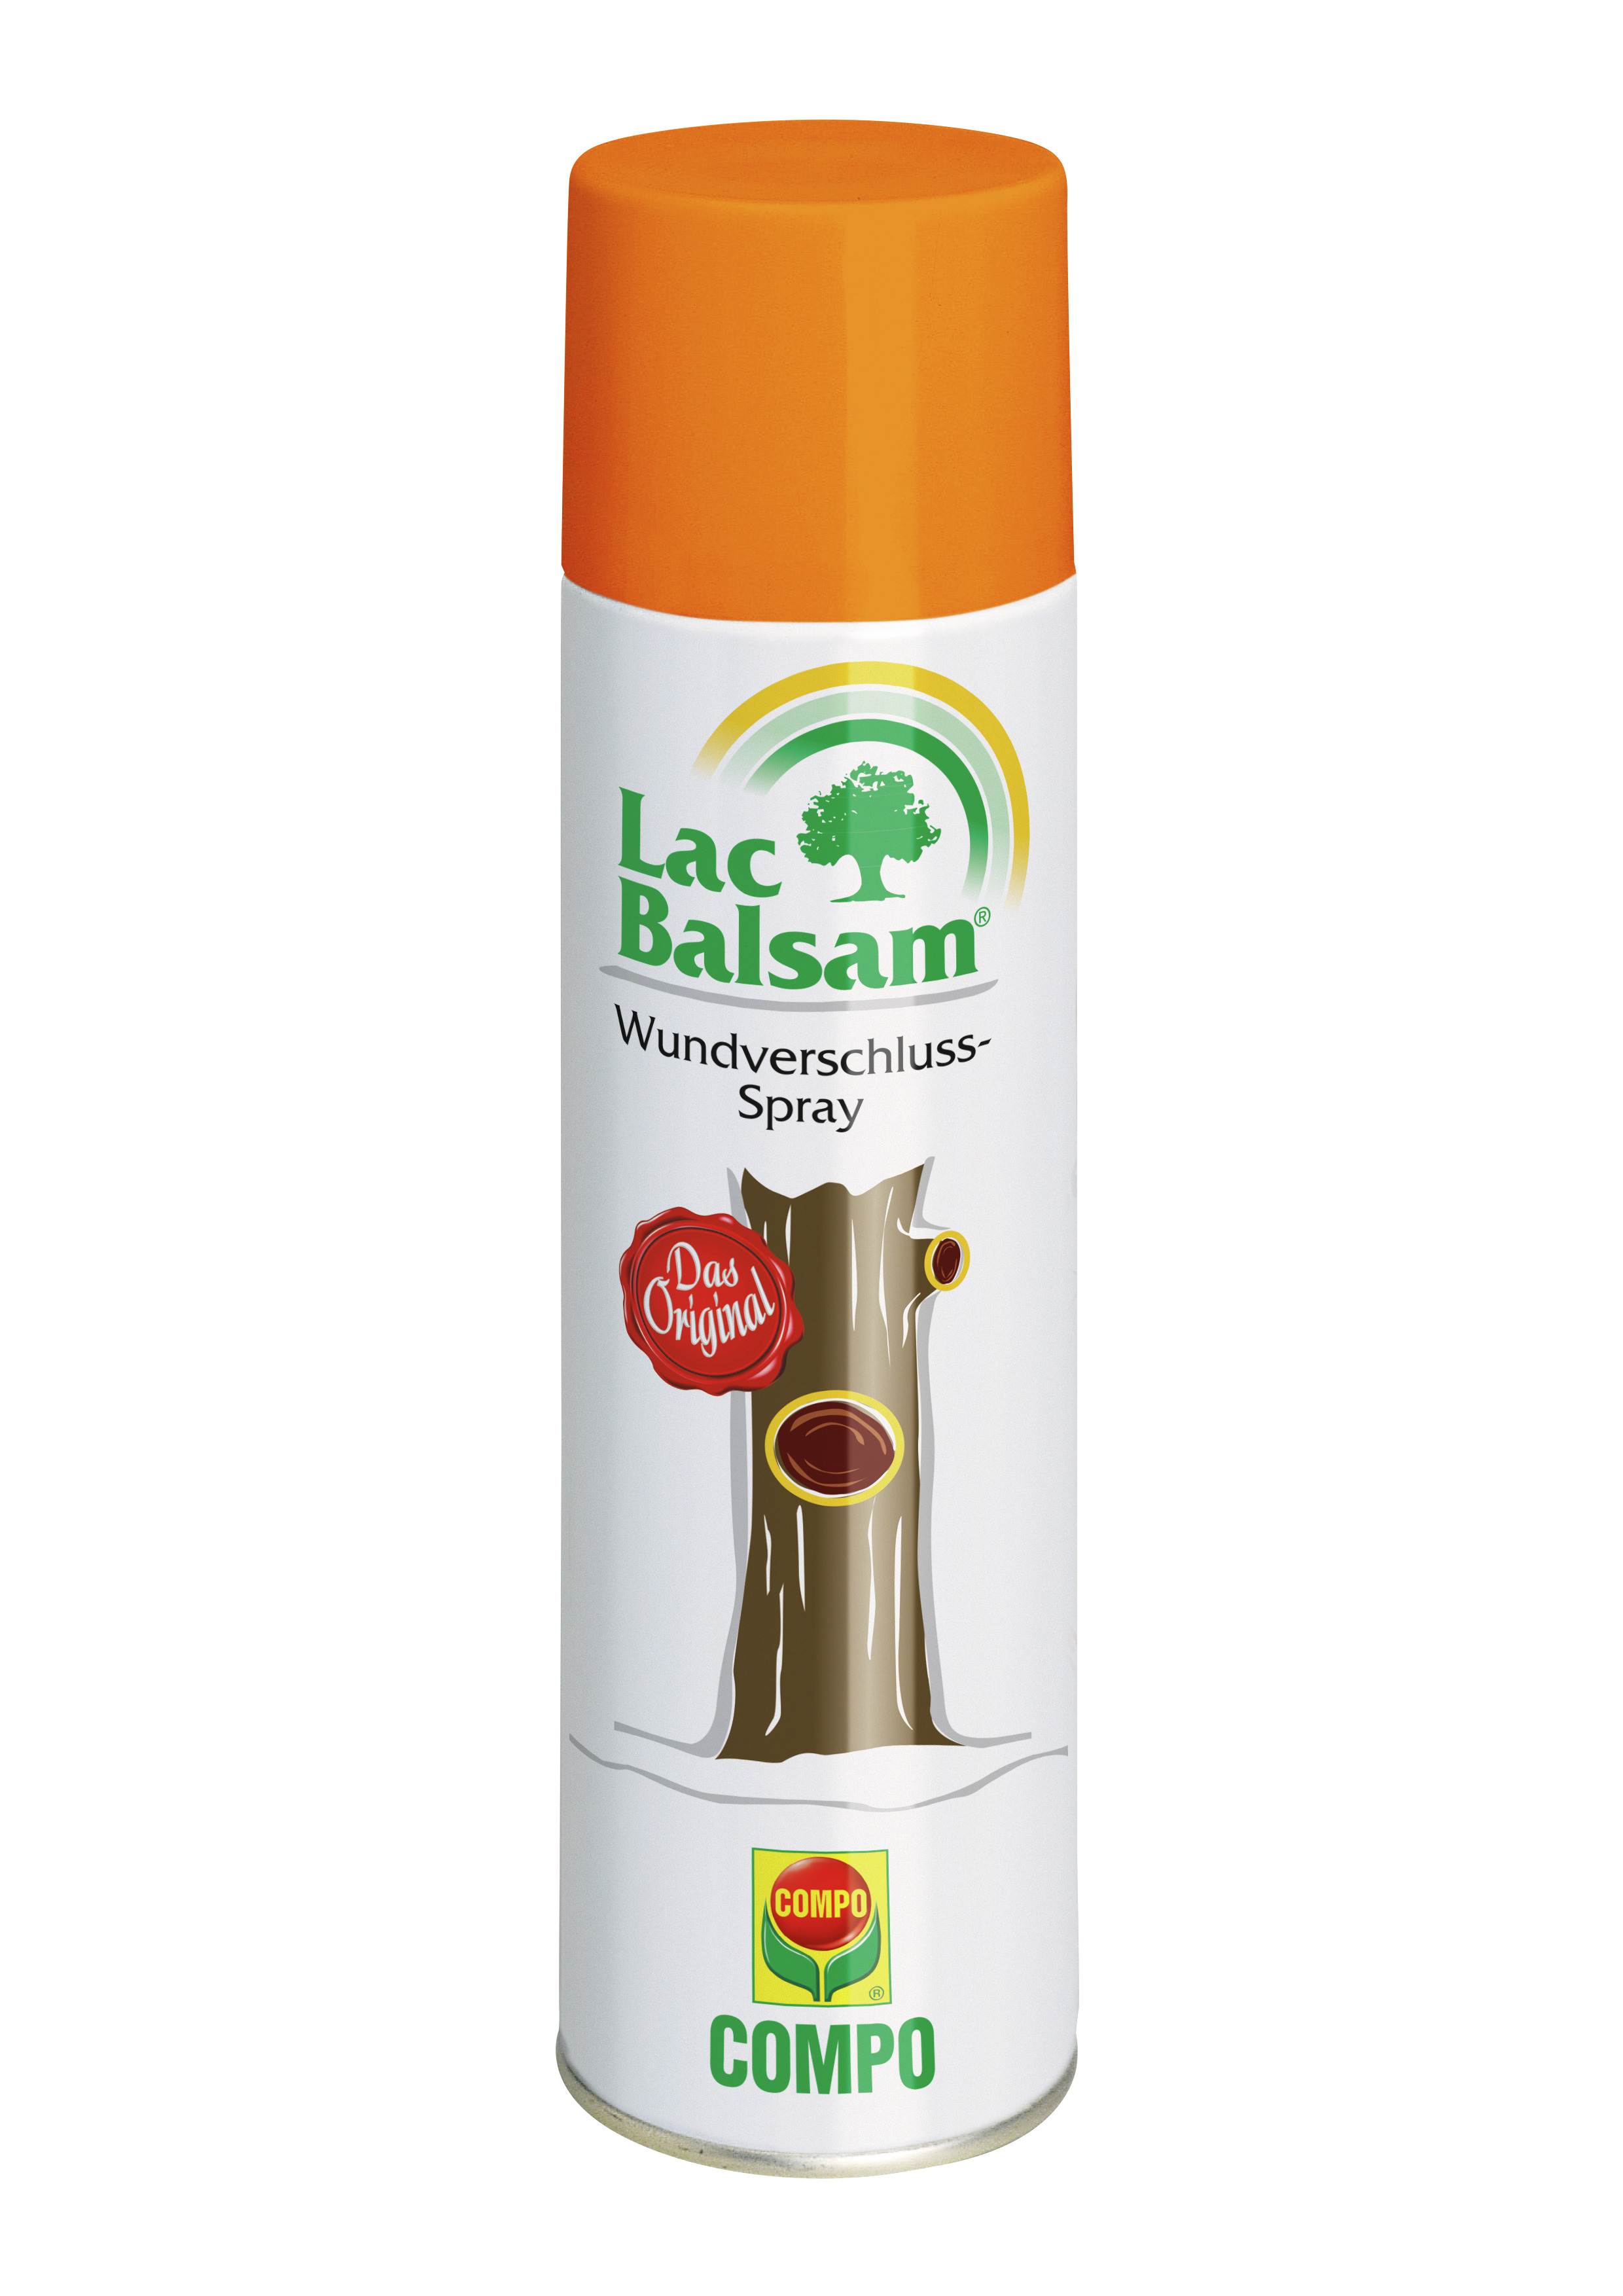 COMPO LacBalsam Spray 300ml Compo EREG -B3-